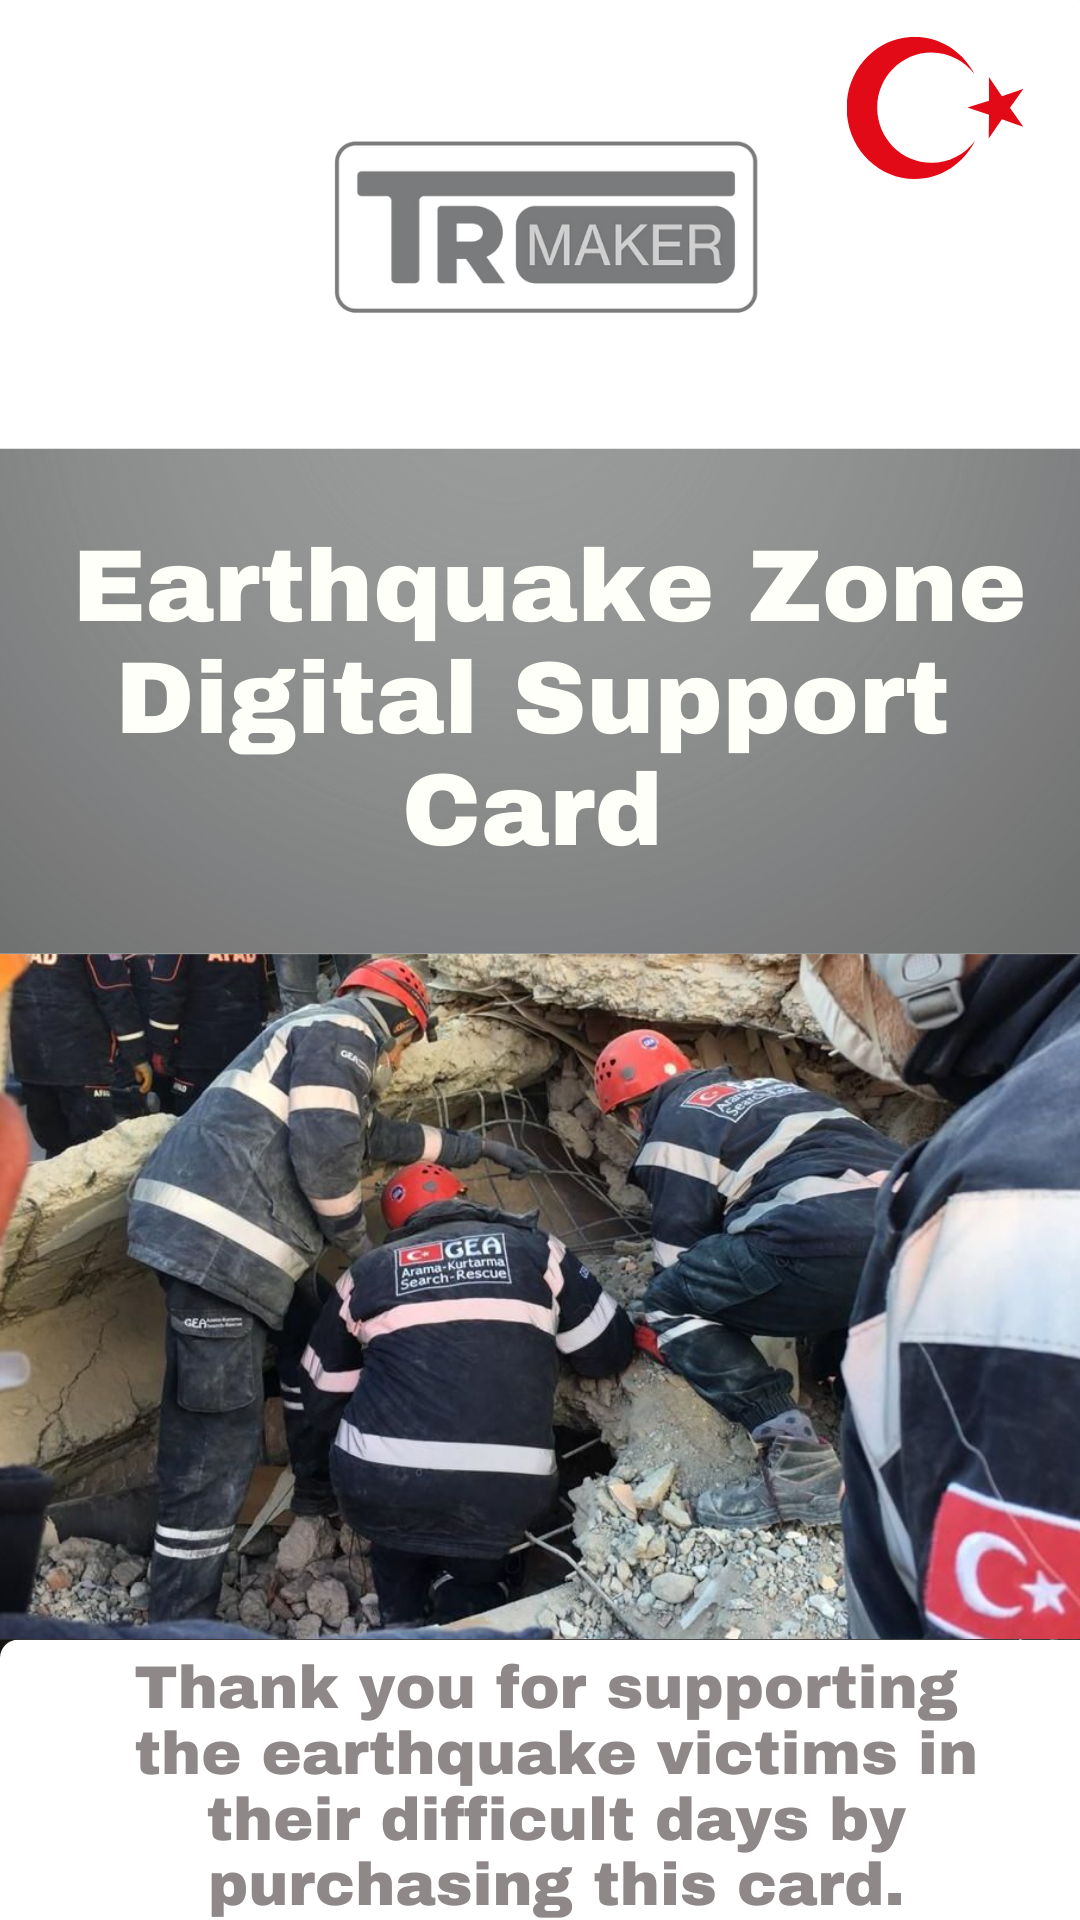 TURKEY EARTHQUAKE DONATION